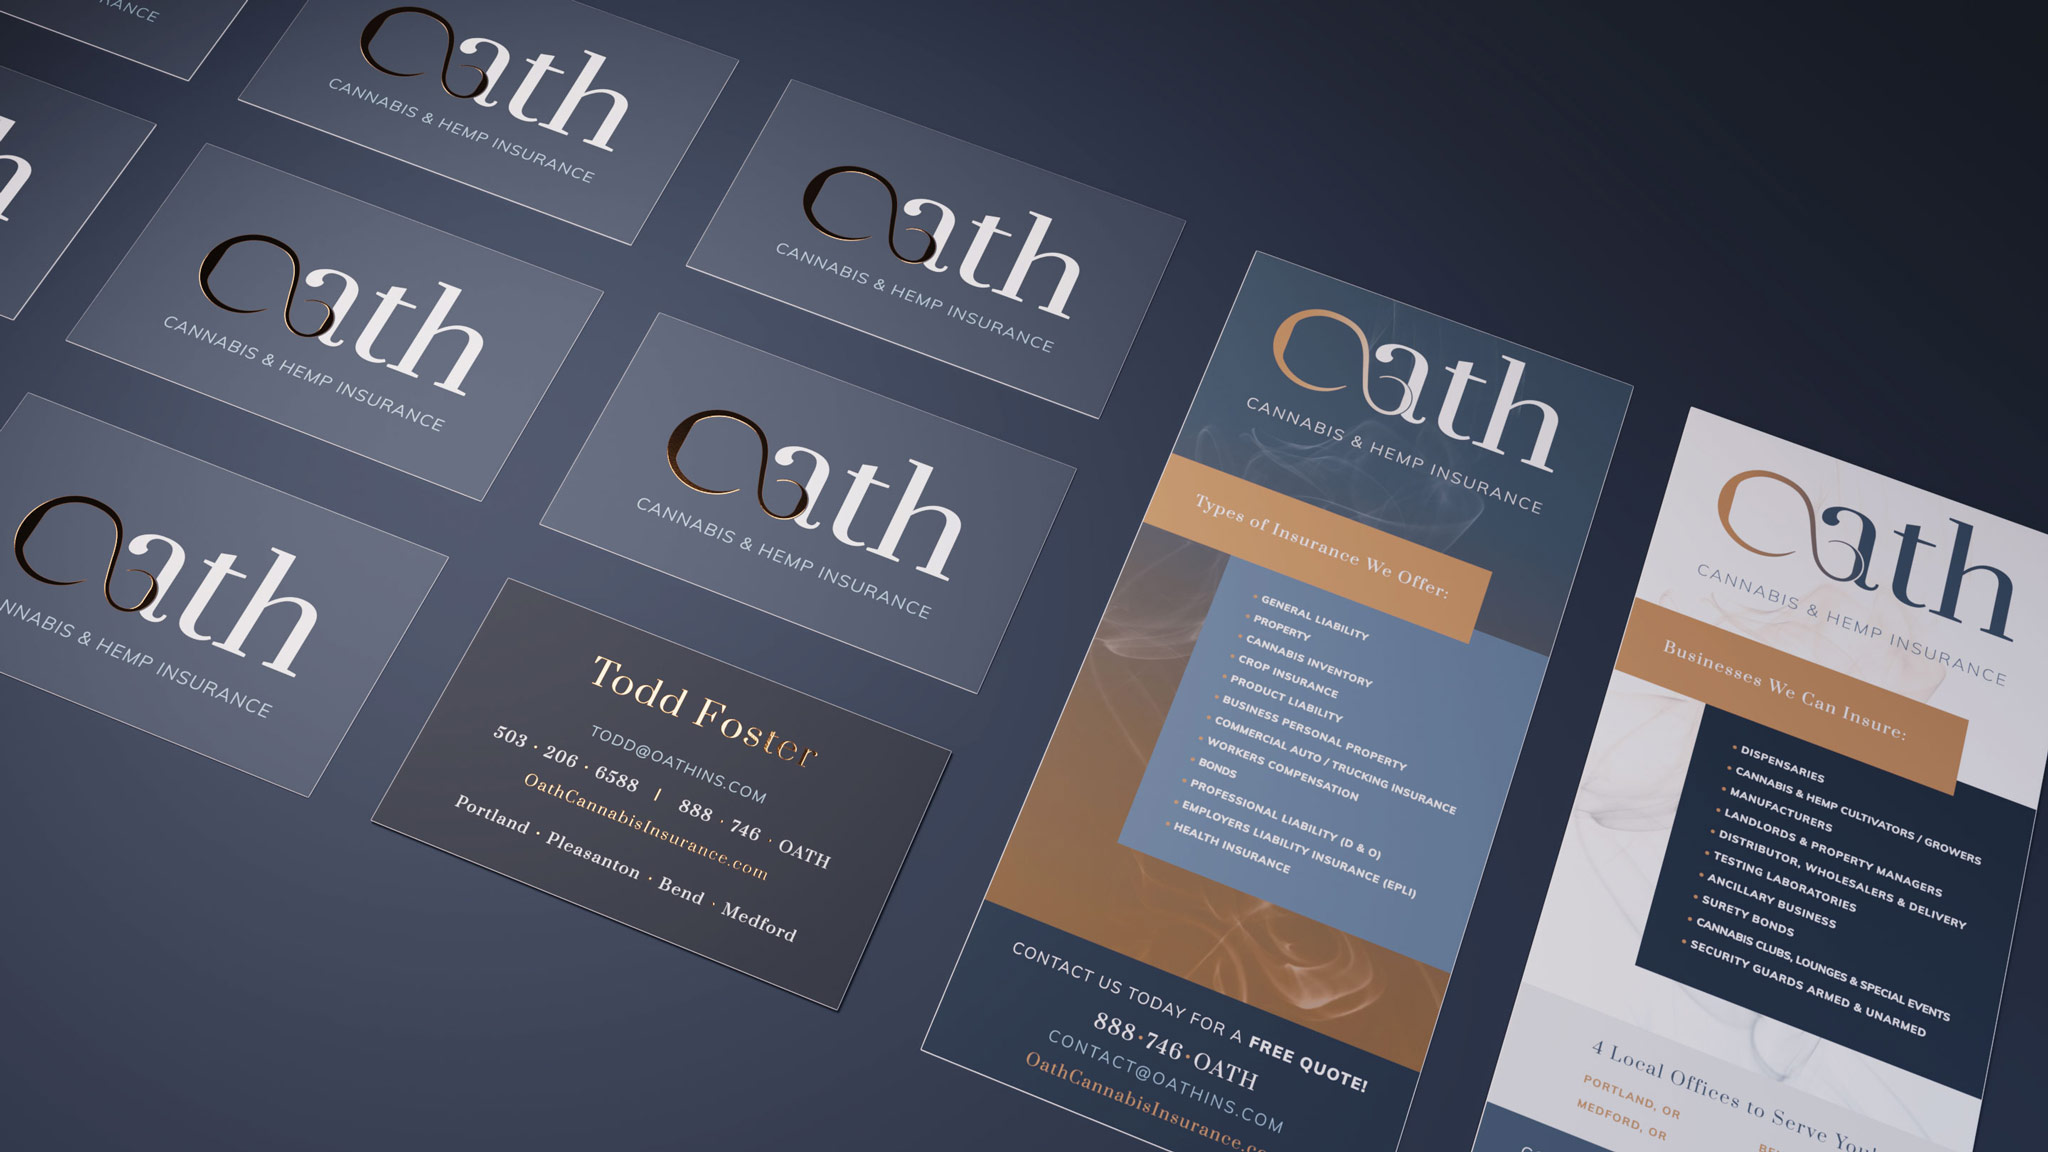 Oath Insurance brand design materials